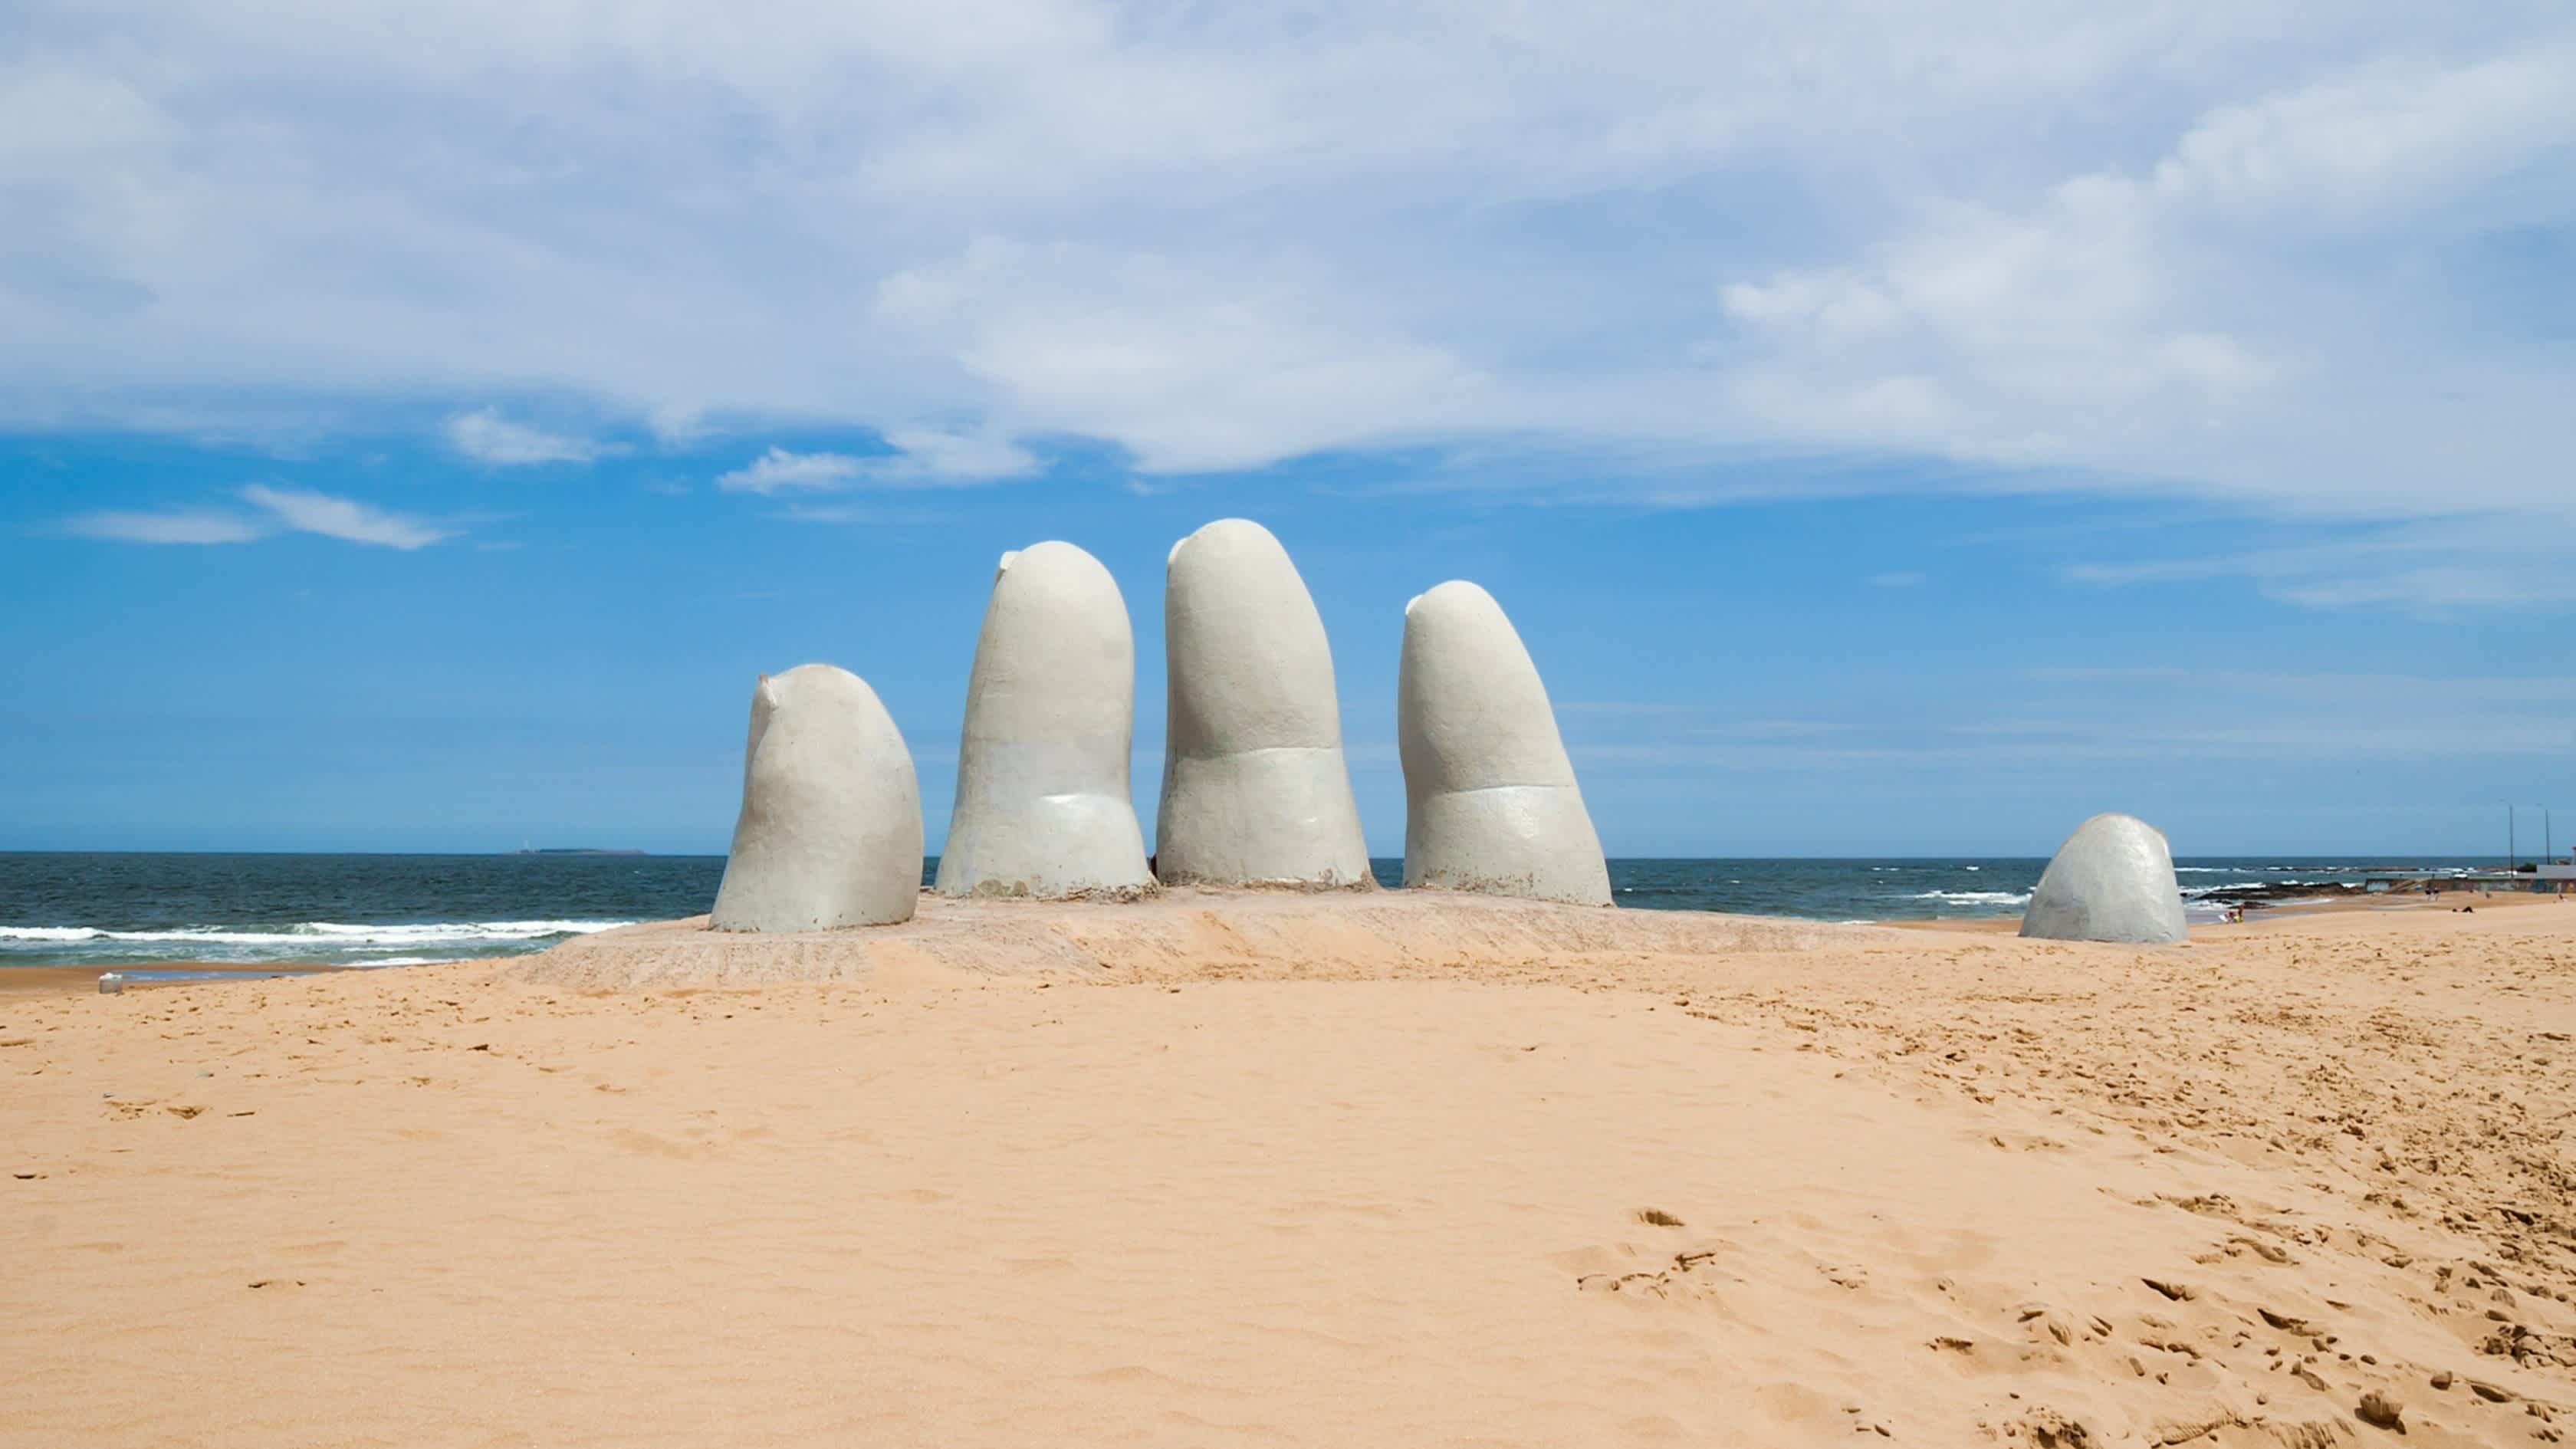 Riesige Handskulptur am Strand in Punta del Este, Uruguay bei schönem Wetter.